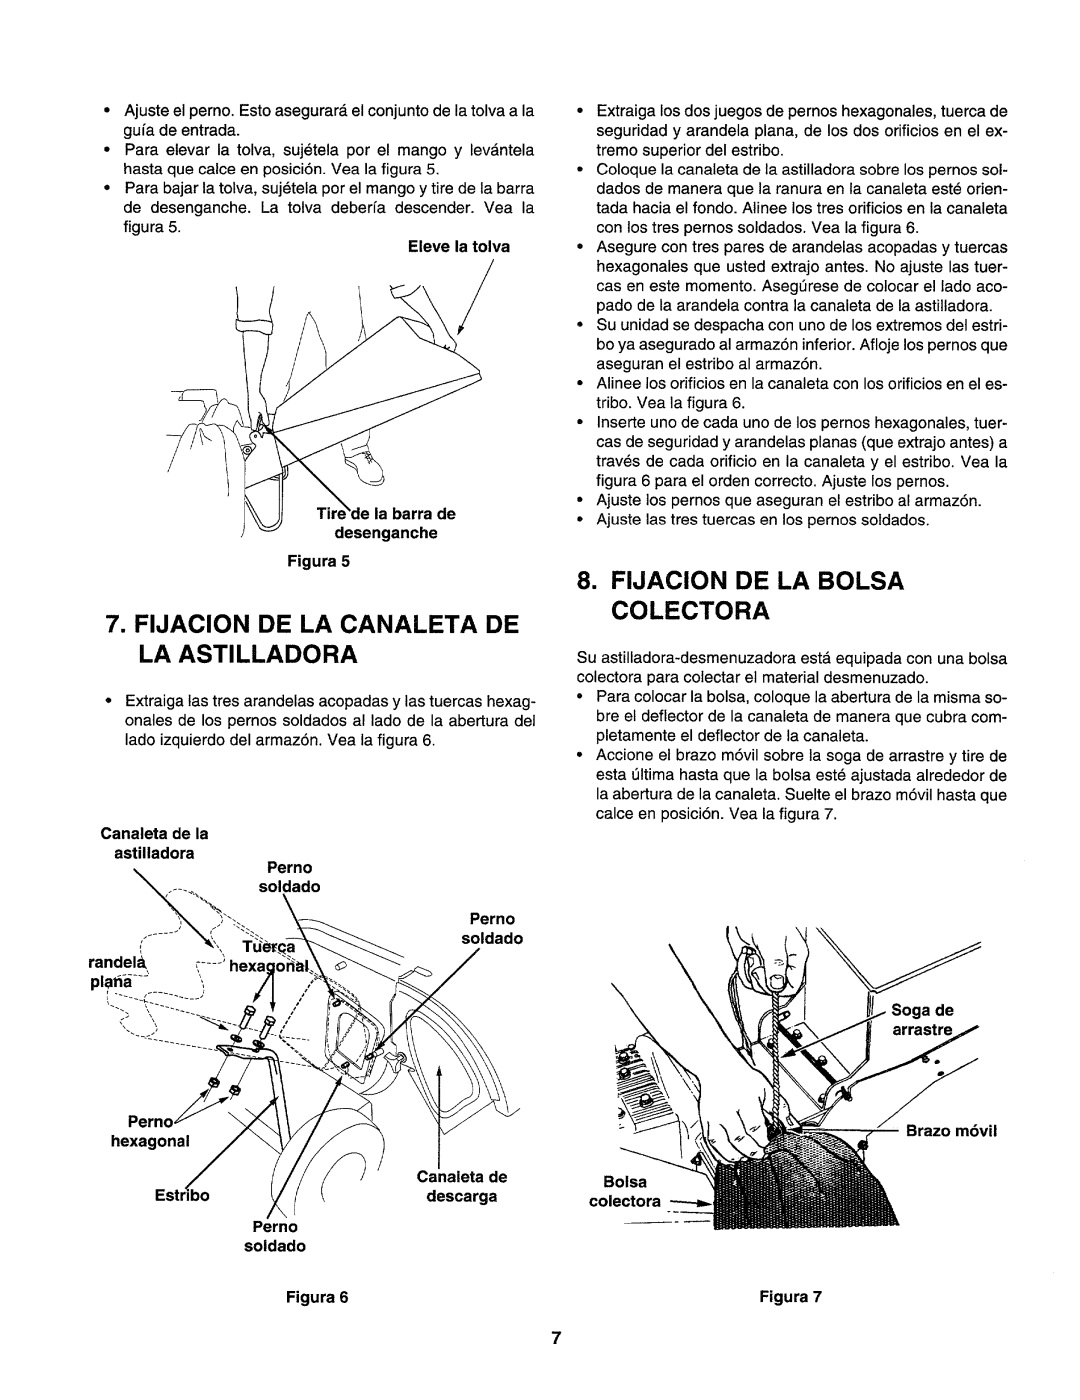 Craftsman 247.77586 manual Fijacion De La Canaleta De La Astilladora, Fijacion De La Bolsa Colectora, Pernc hexagonal, a de 